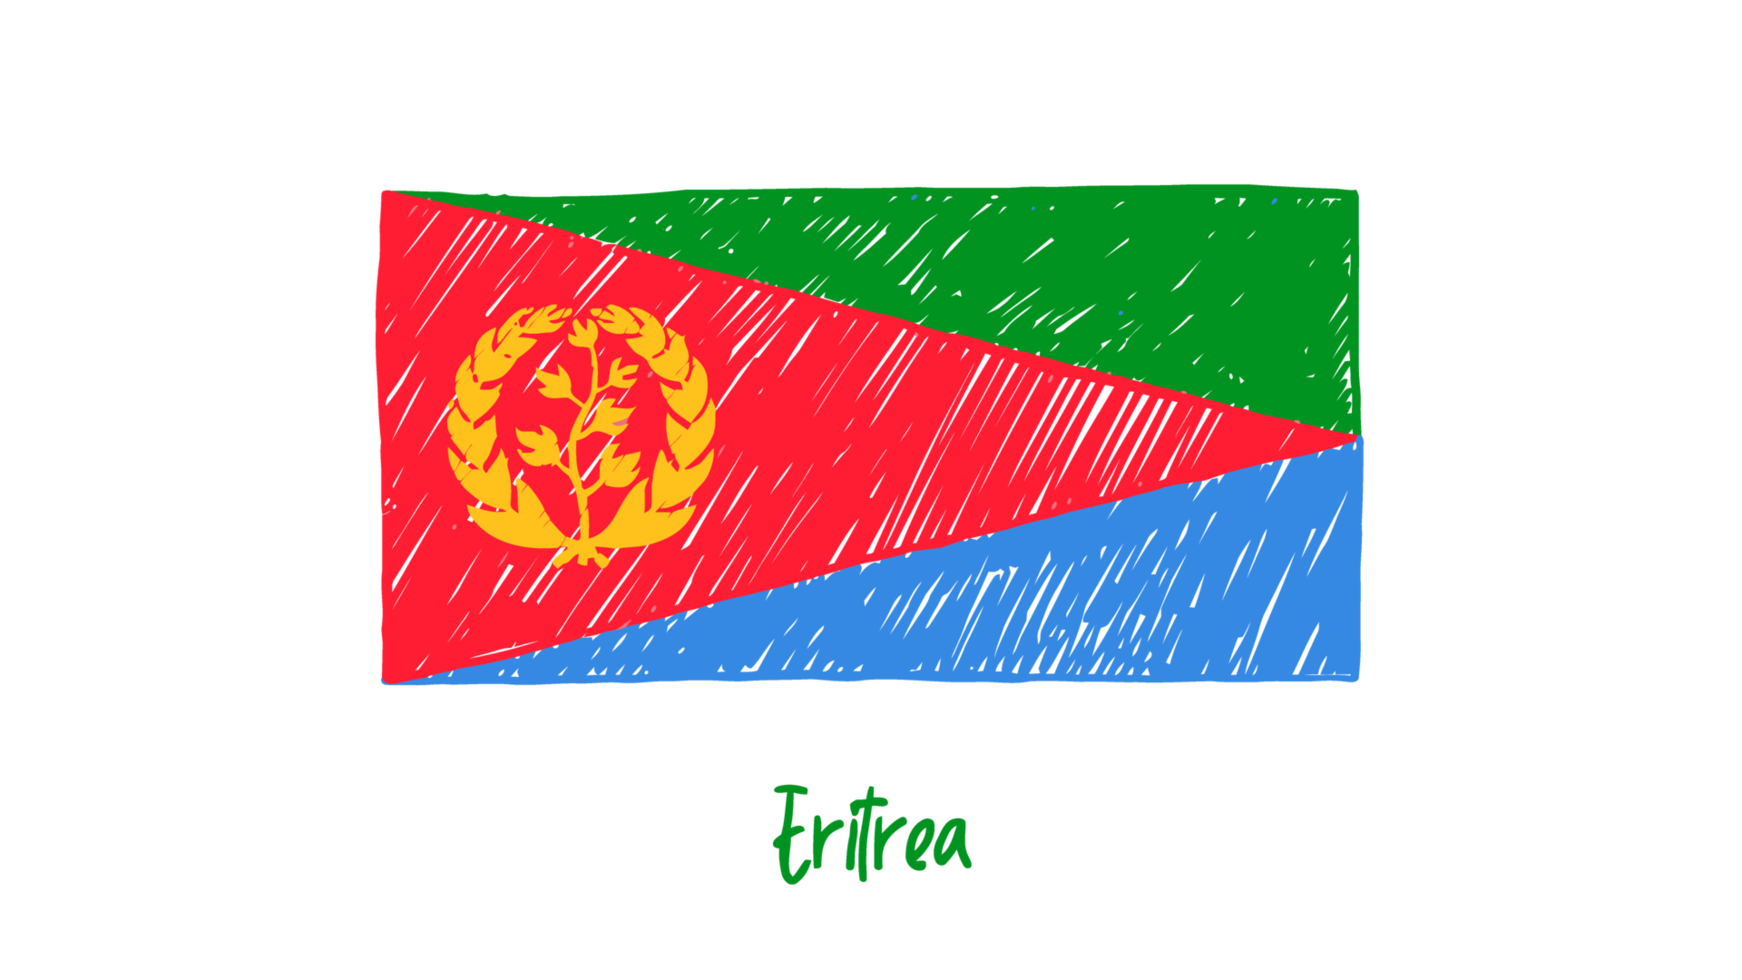 Eritrea National Flag Pencil Color Sketch with Transparent Background png